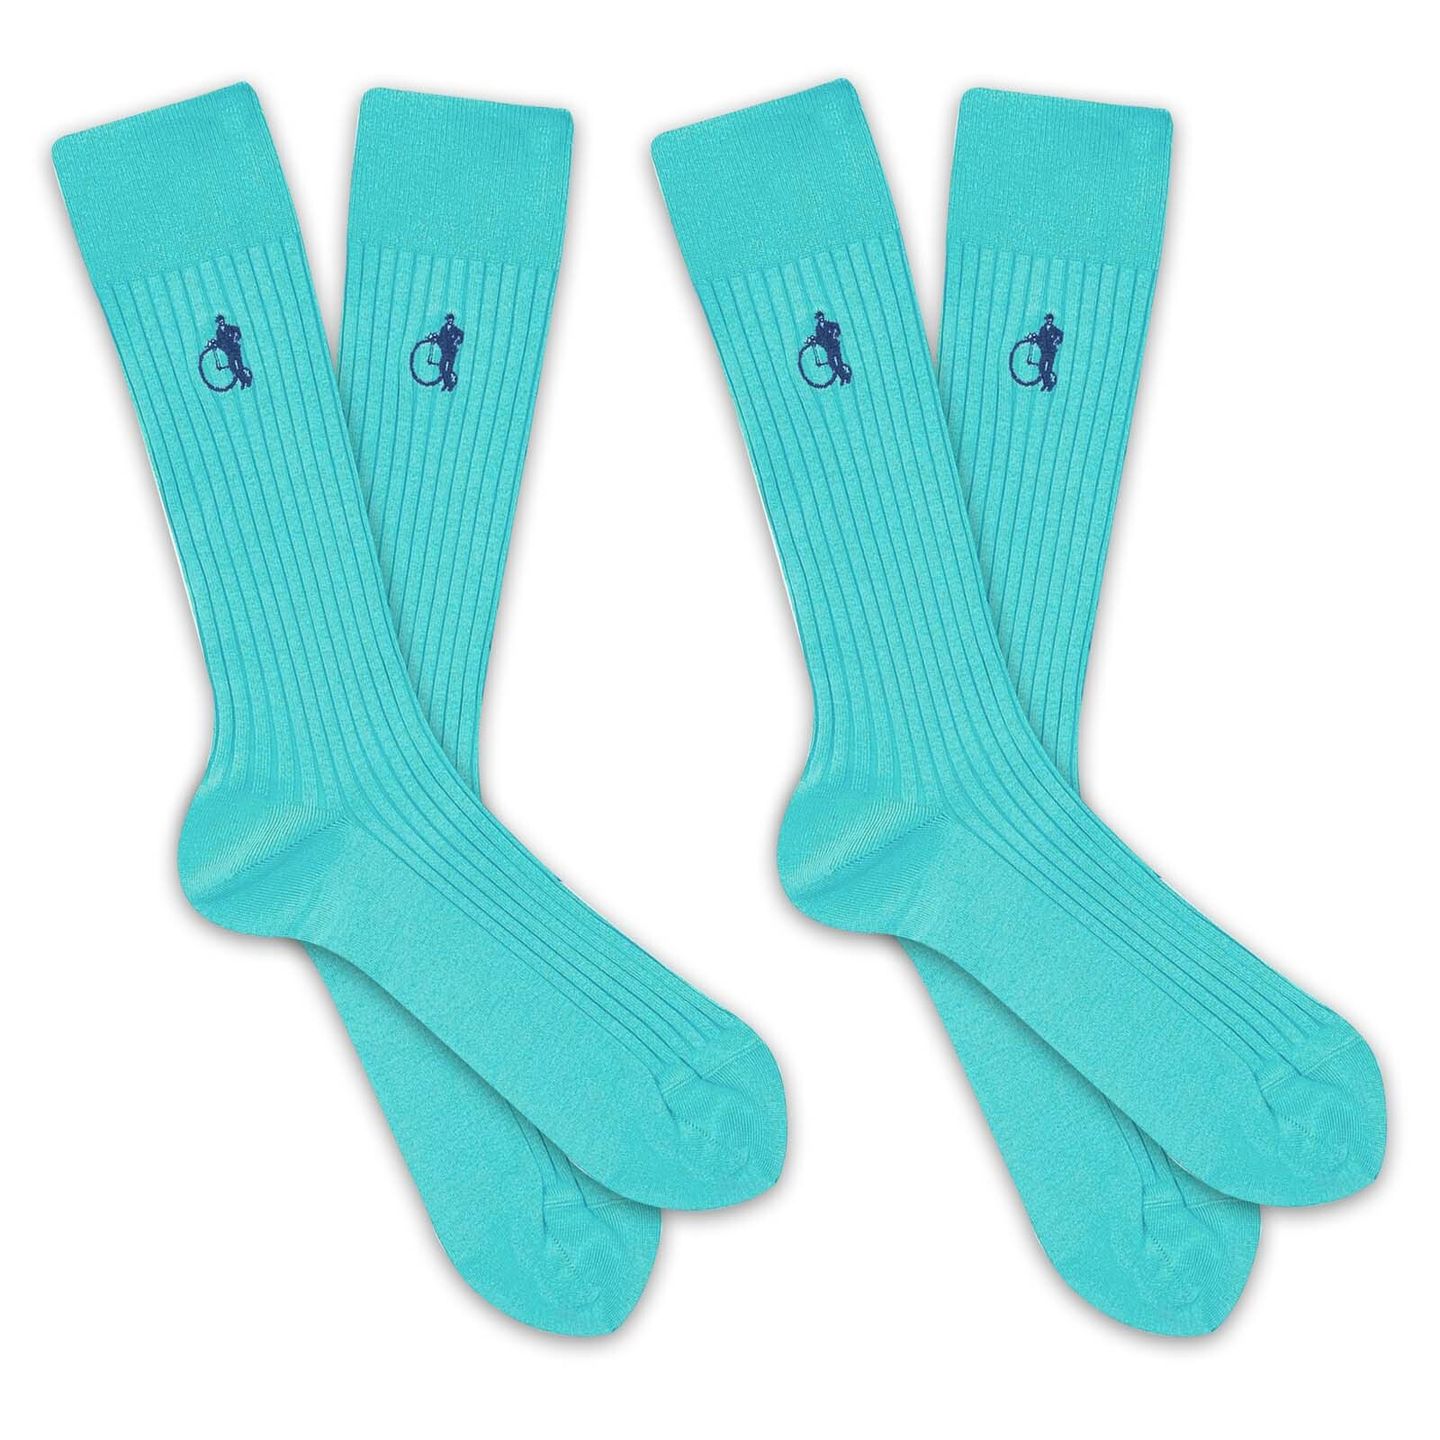 2 pairs of simply marine blue socks